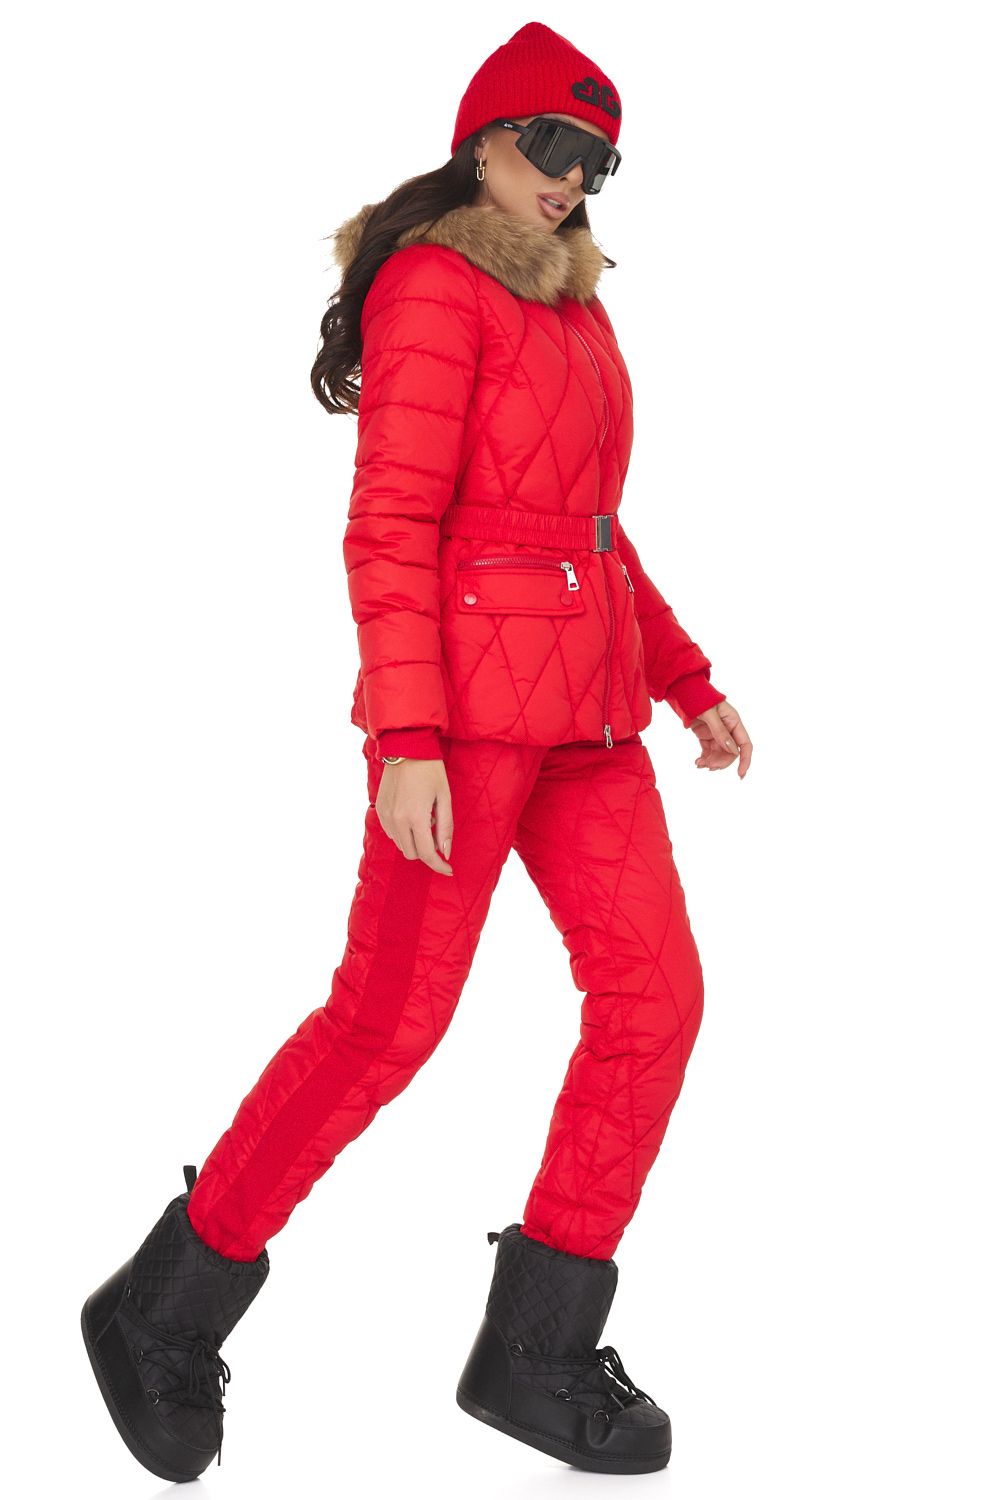 Women's red winter costume Zemidea Bogas